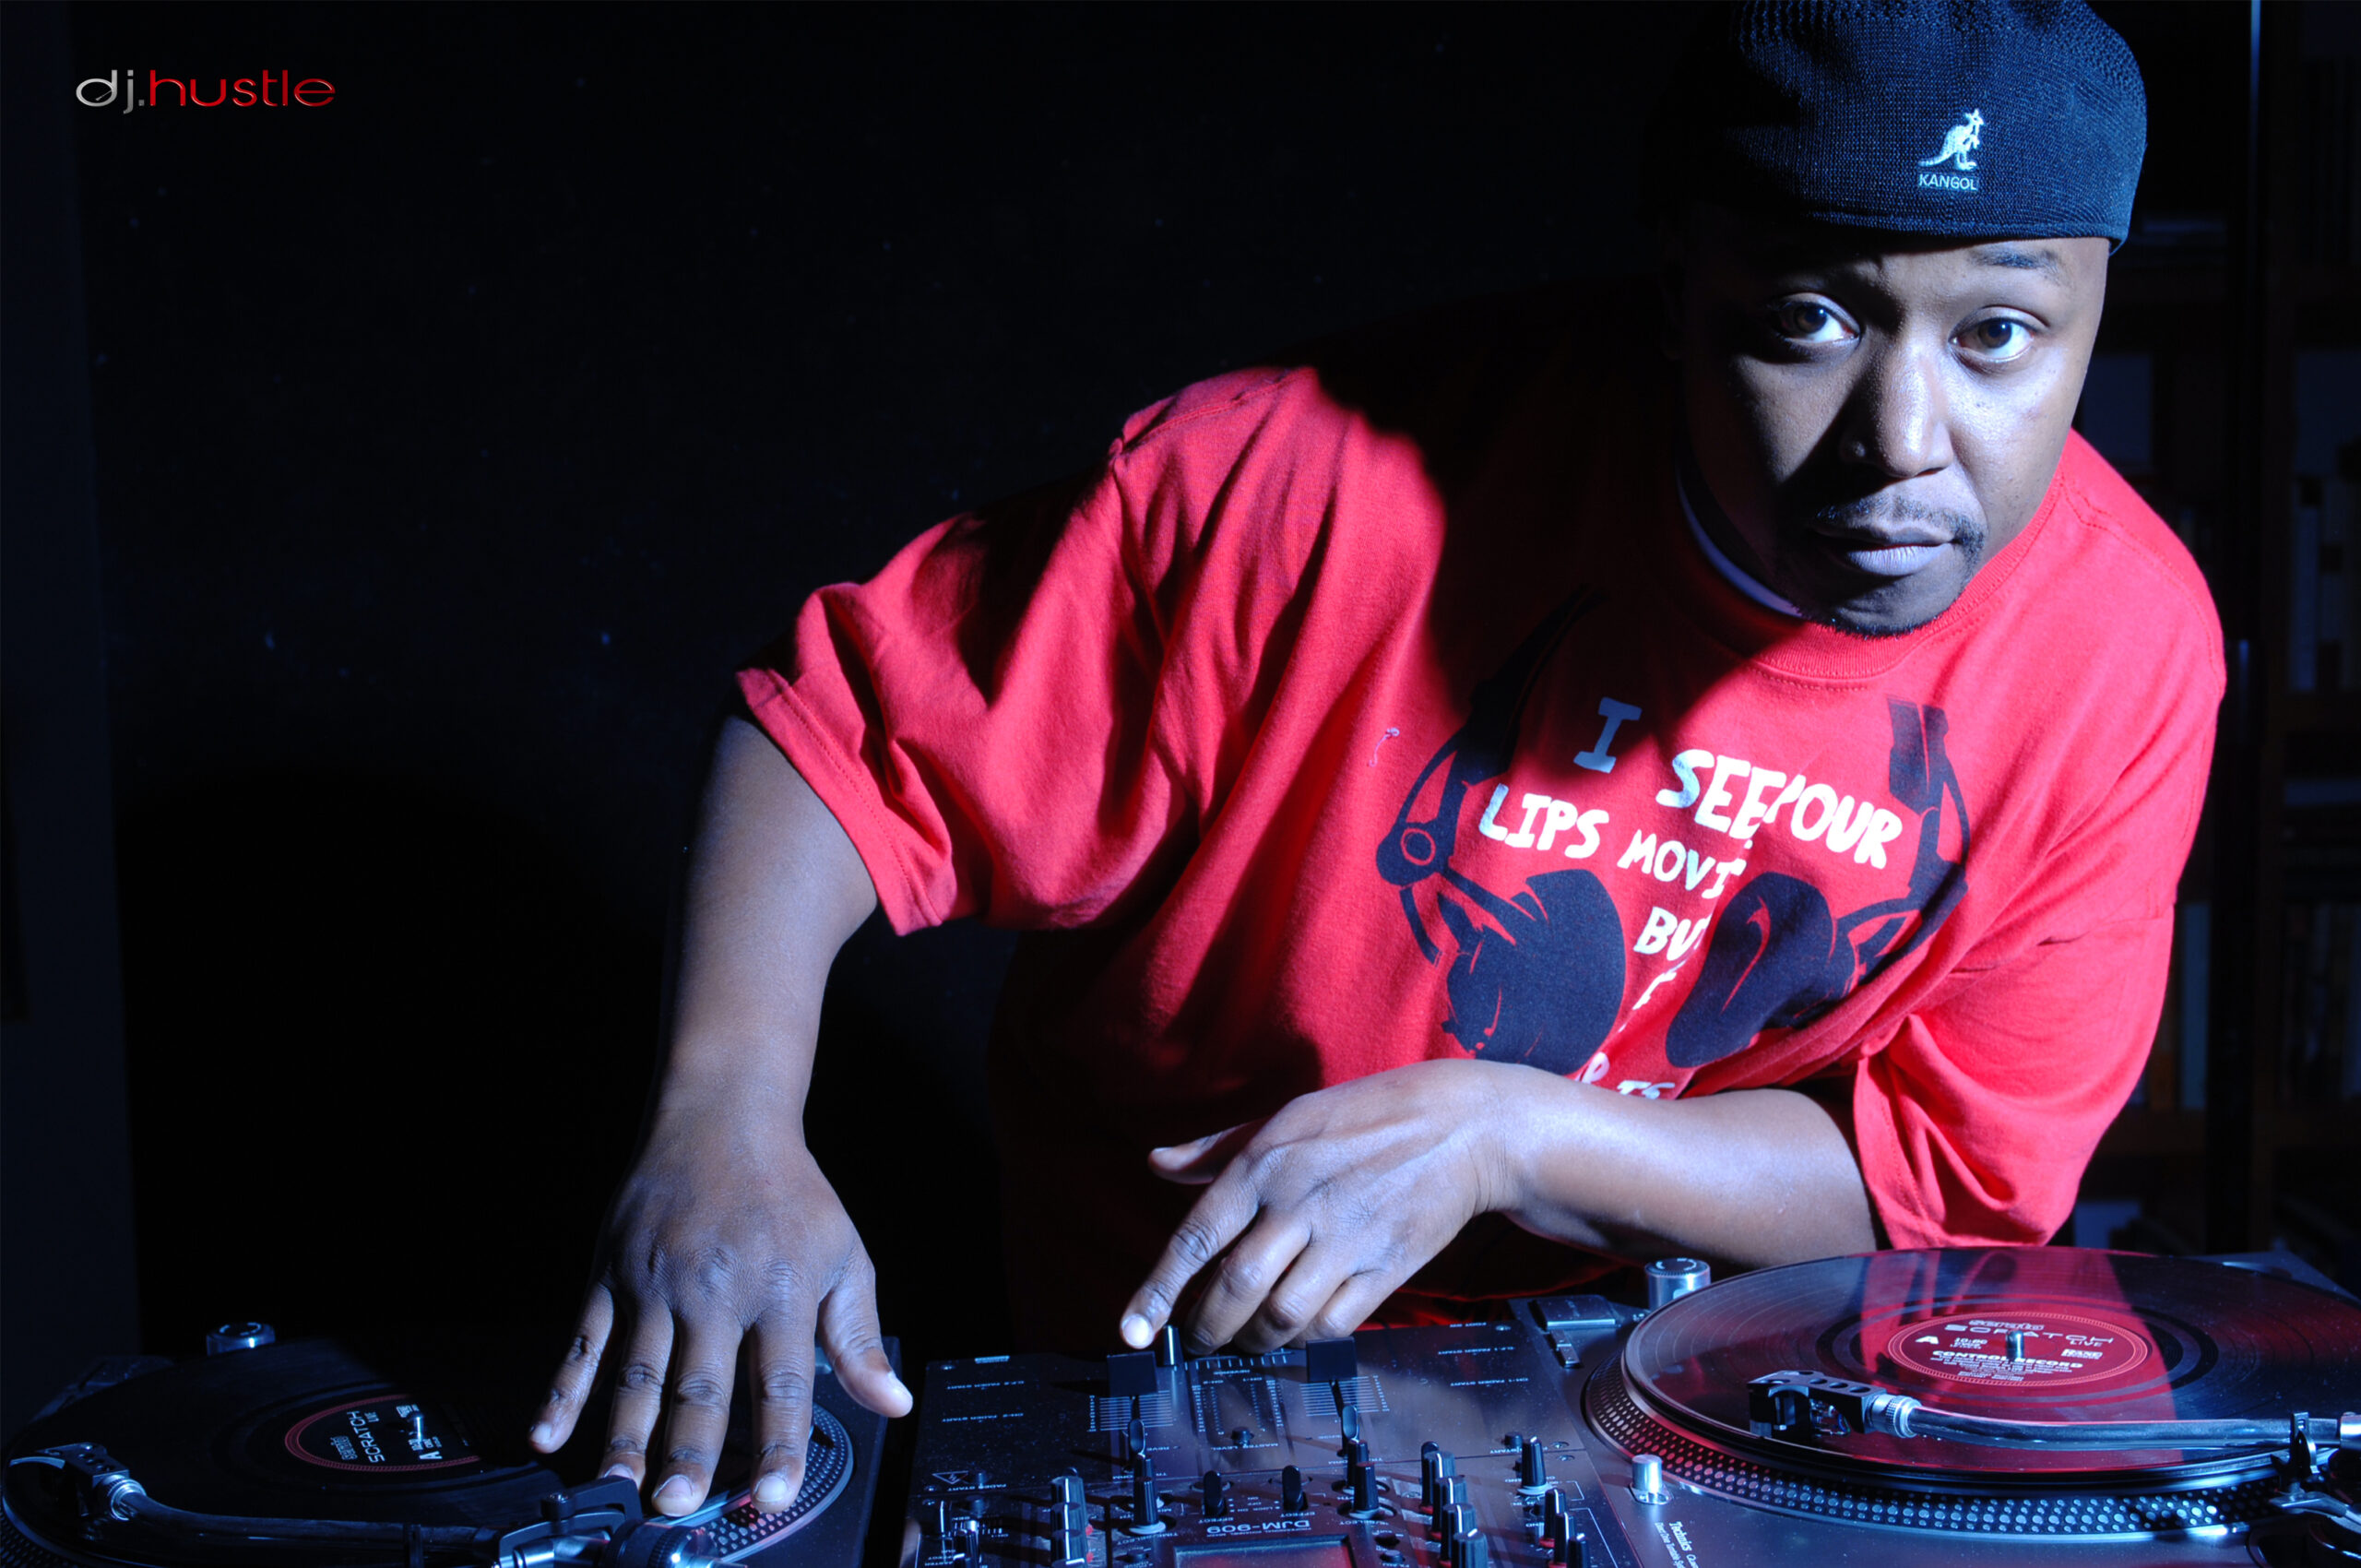 DJ Hustle Presents 2Pac Ft 2Pac Blends & Cuts